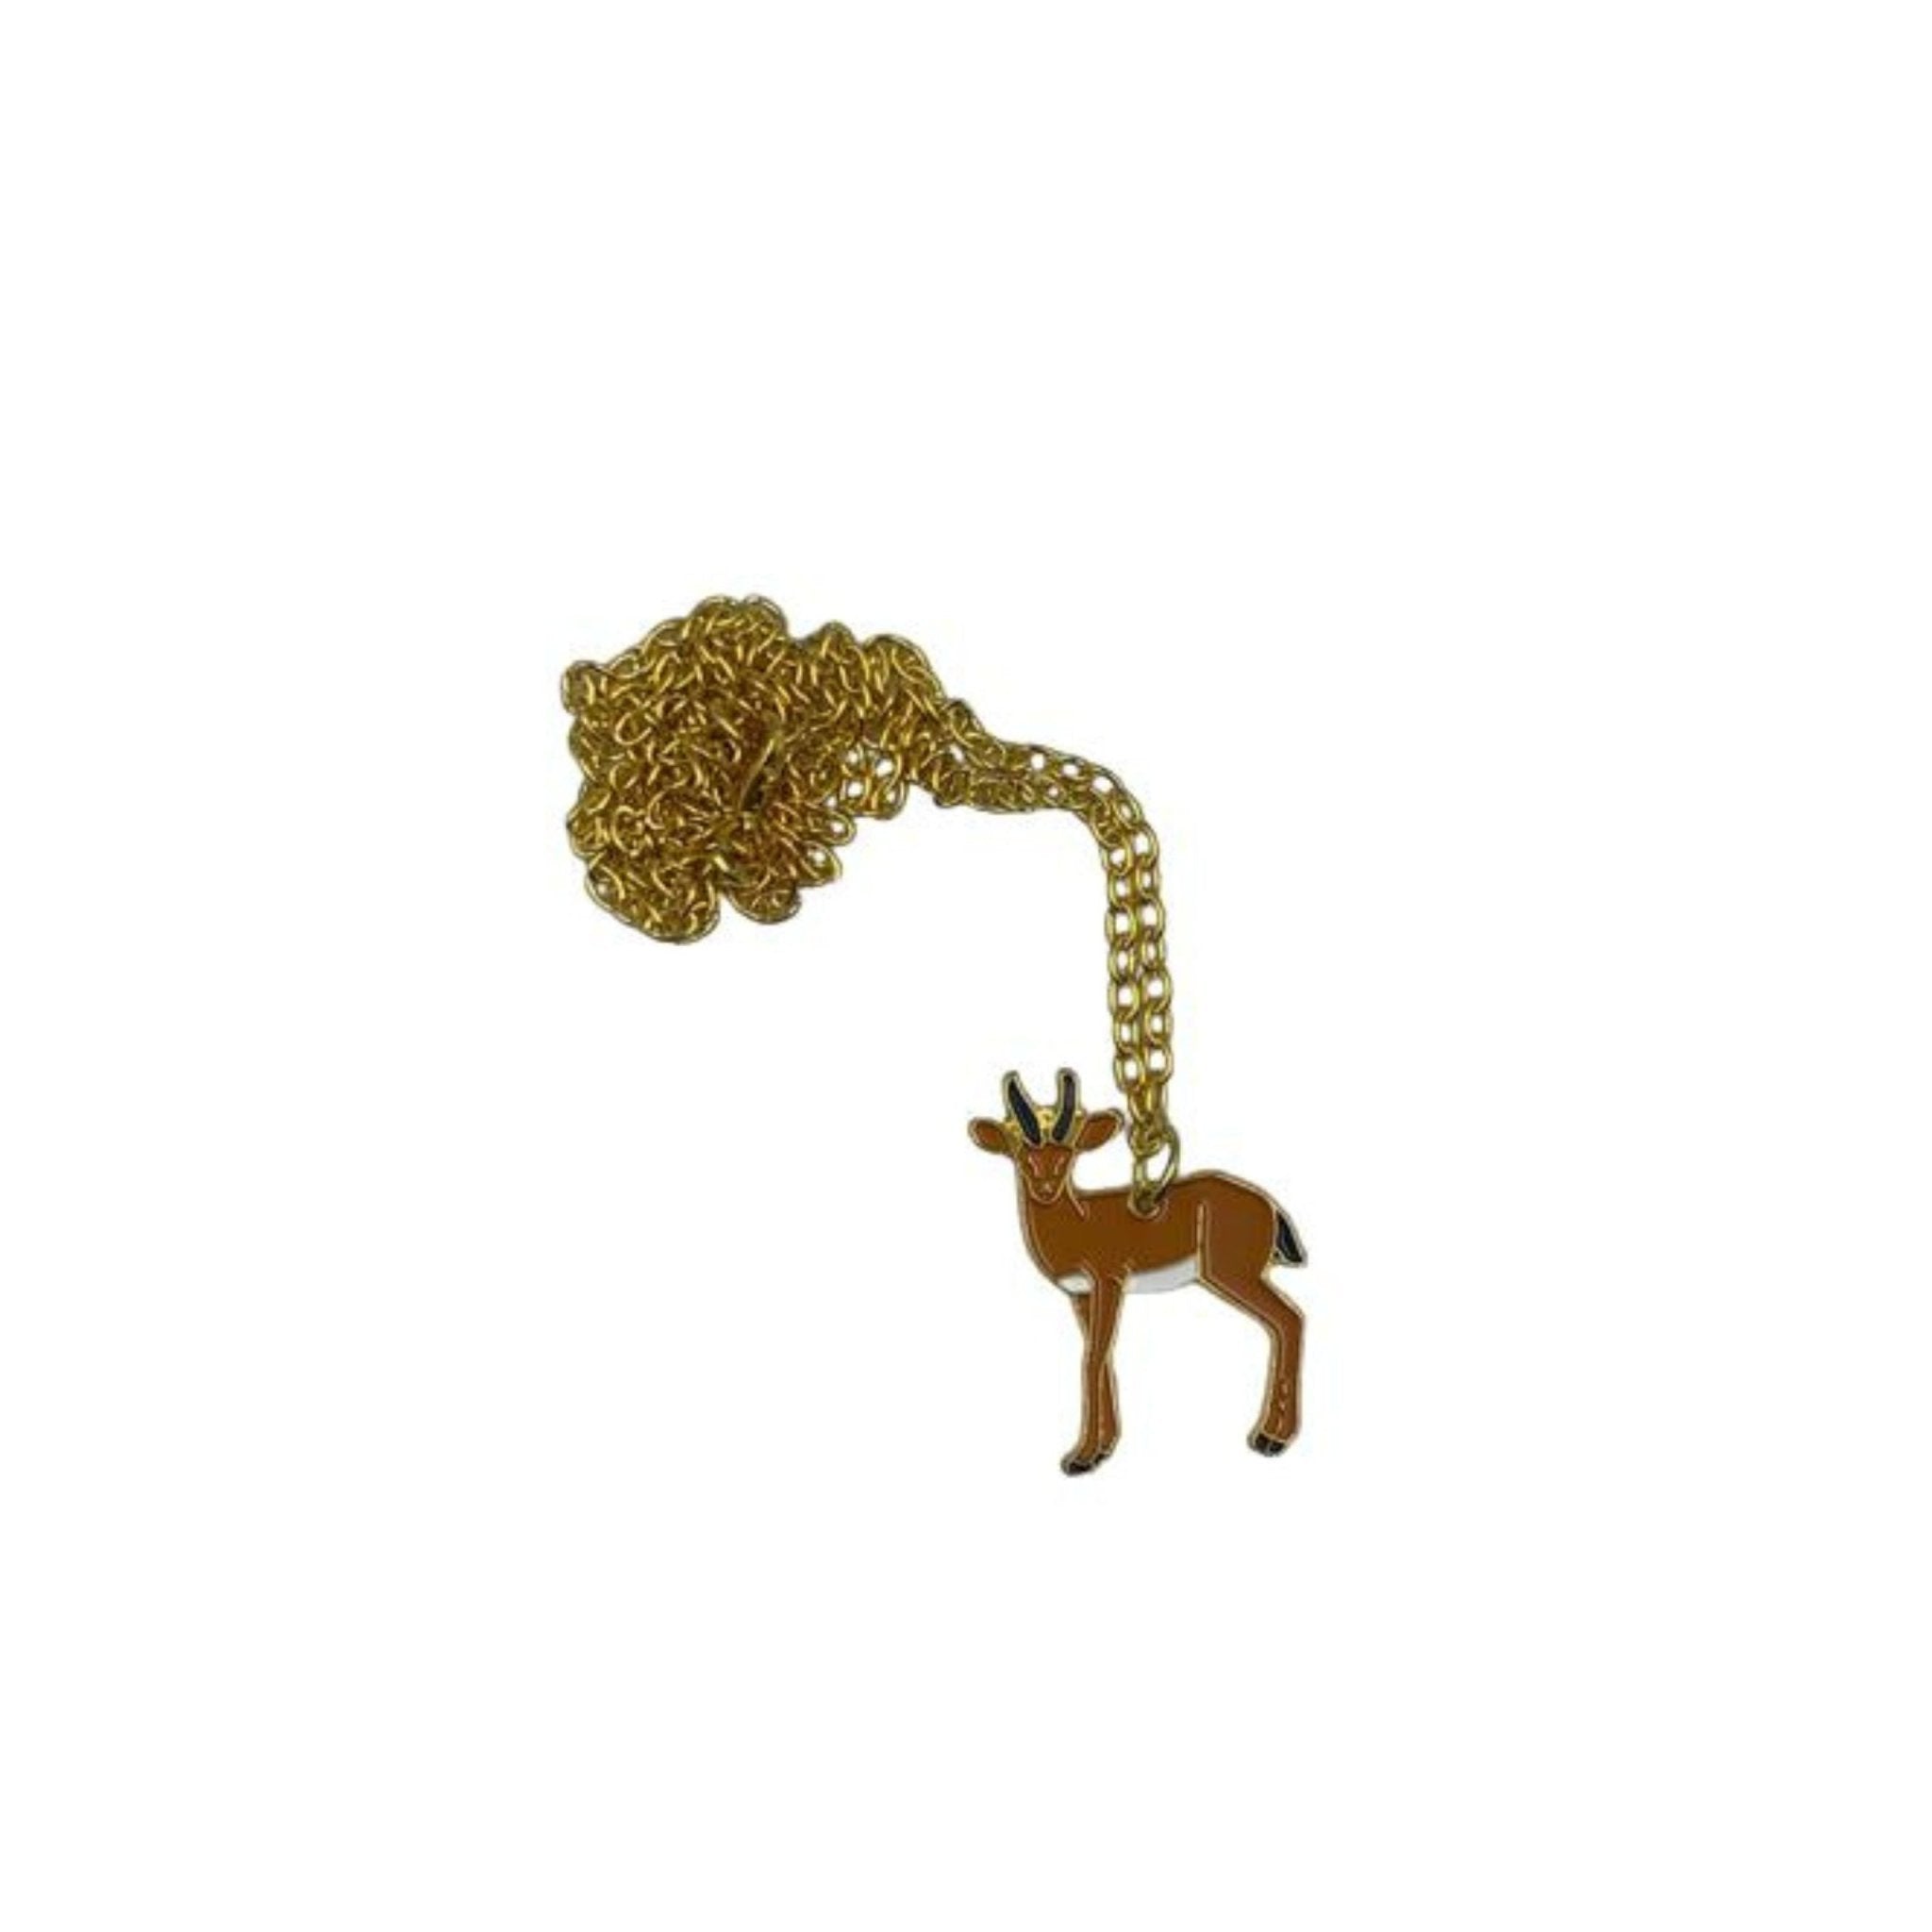 Chain Gazelle 2 - Gold